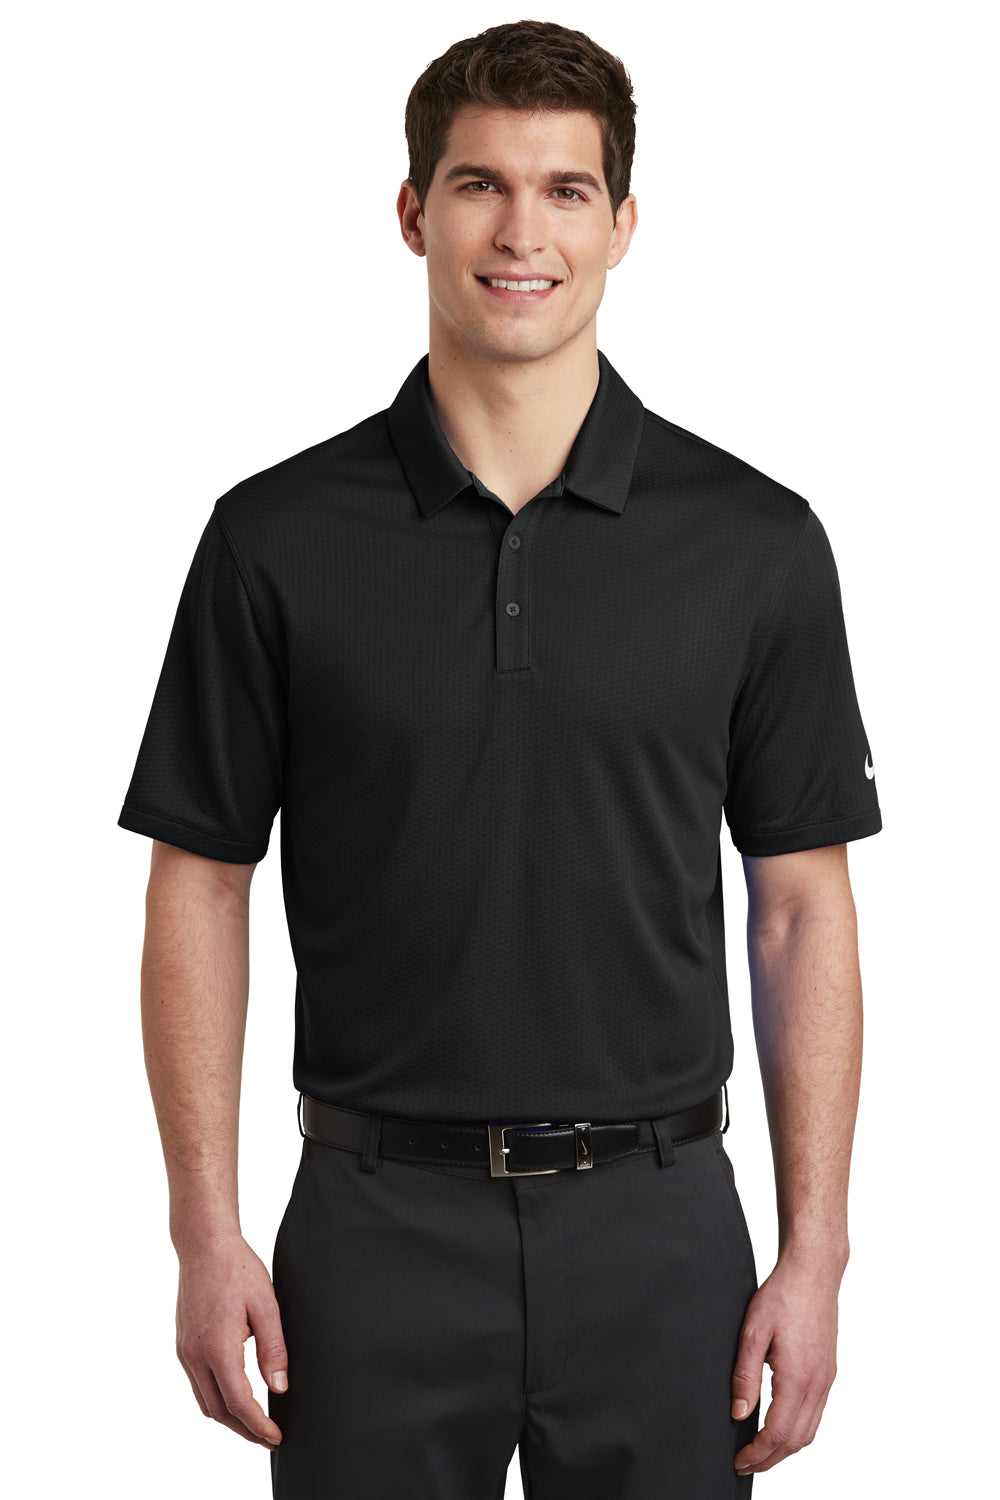 Nike NKAH6266 Mens Dri-Fit Moisture Wicking Short Sleeve Polo Shirt Black Model Front